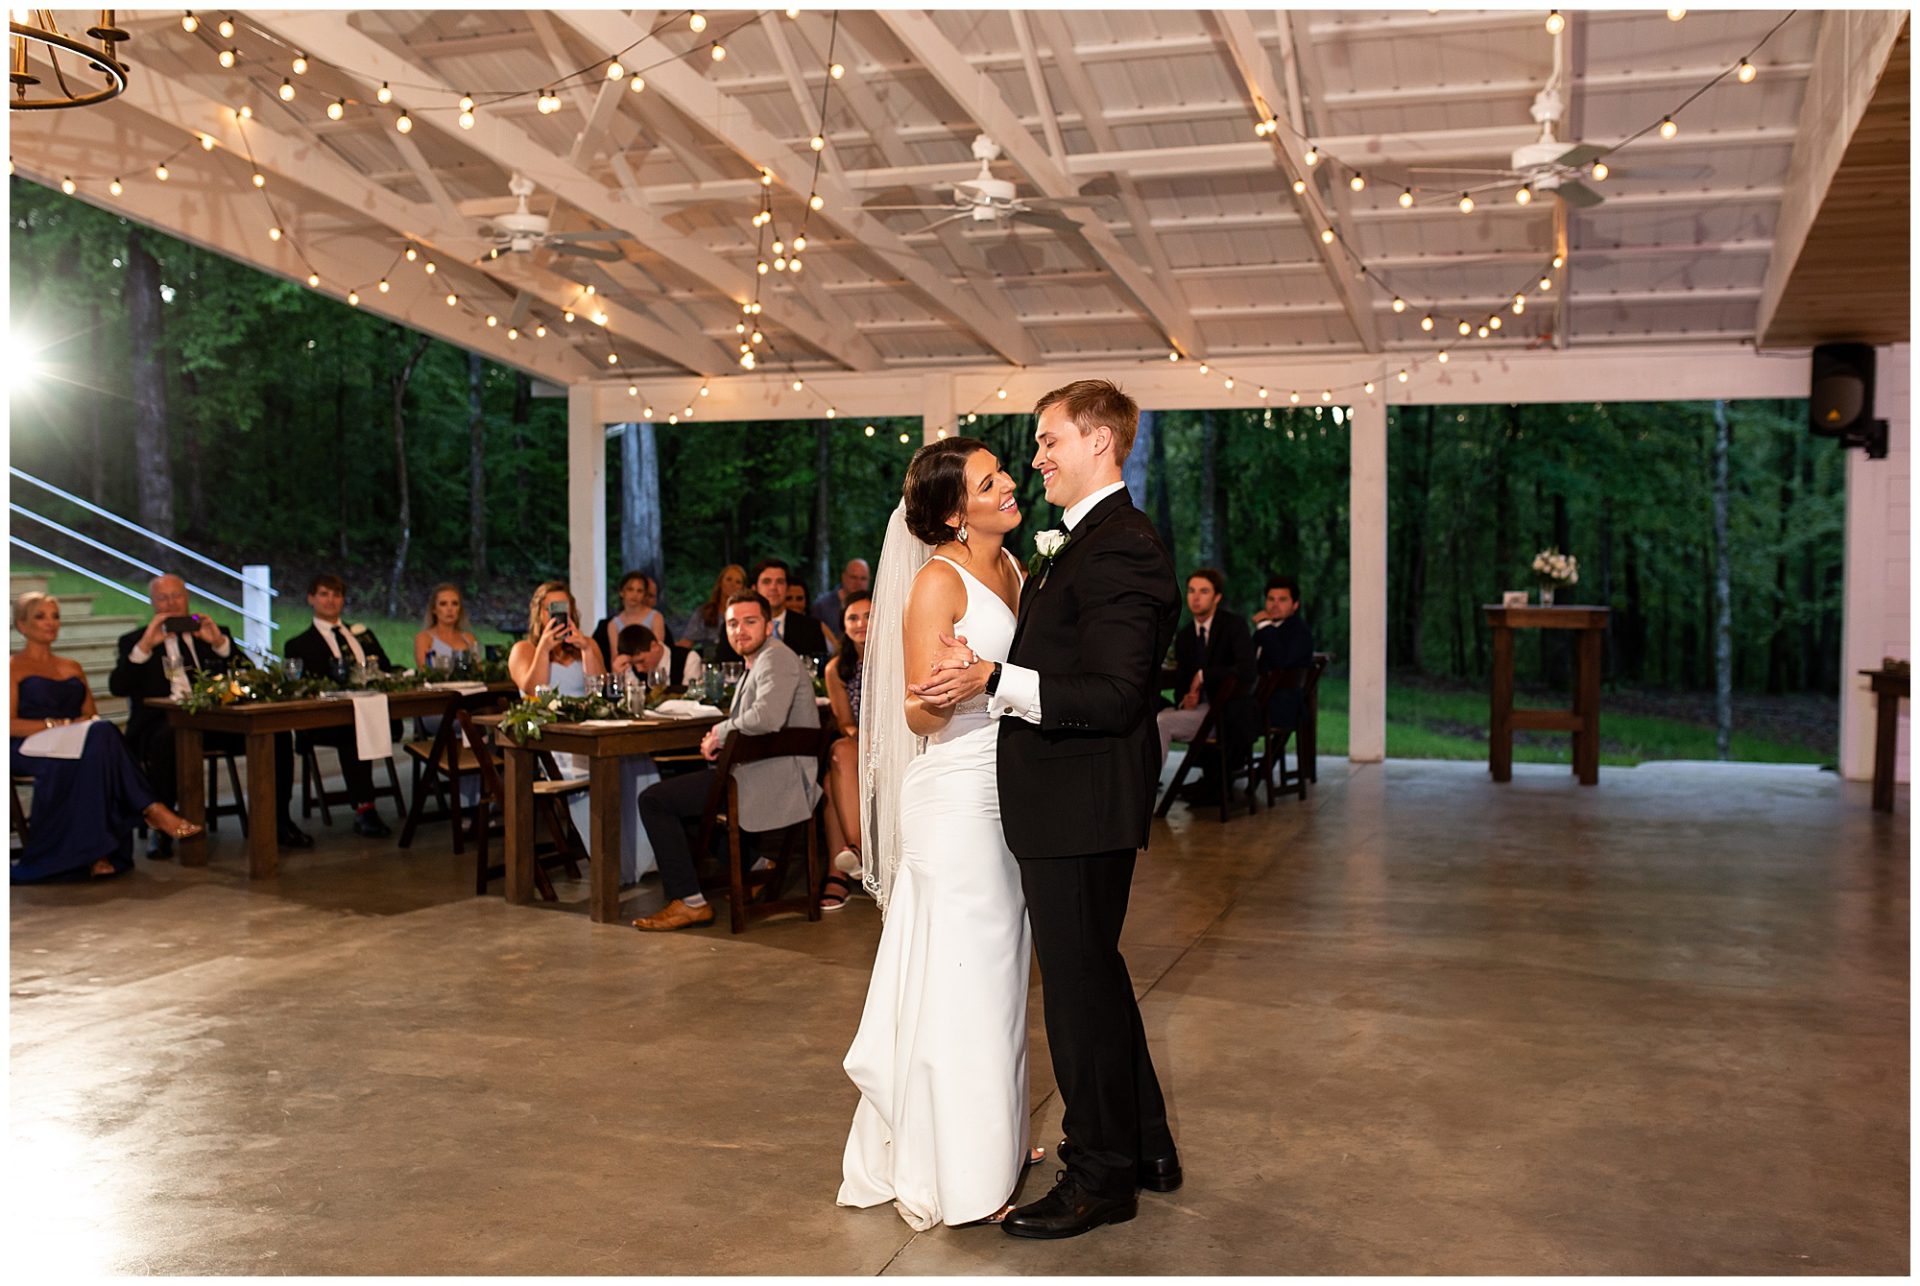 Melanie-Grady-Photography-Chapel-in-the-woods-firefly-lane-wedding-63-1